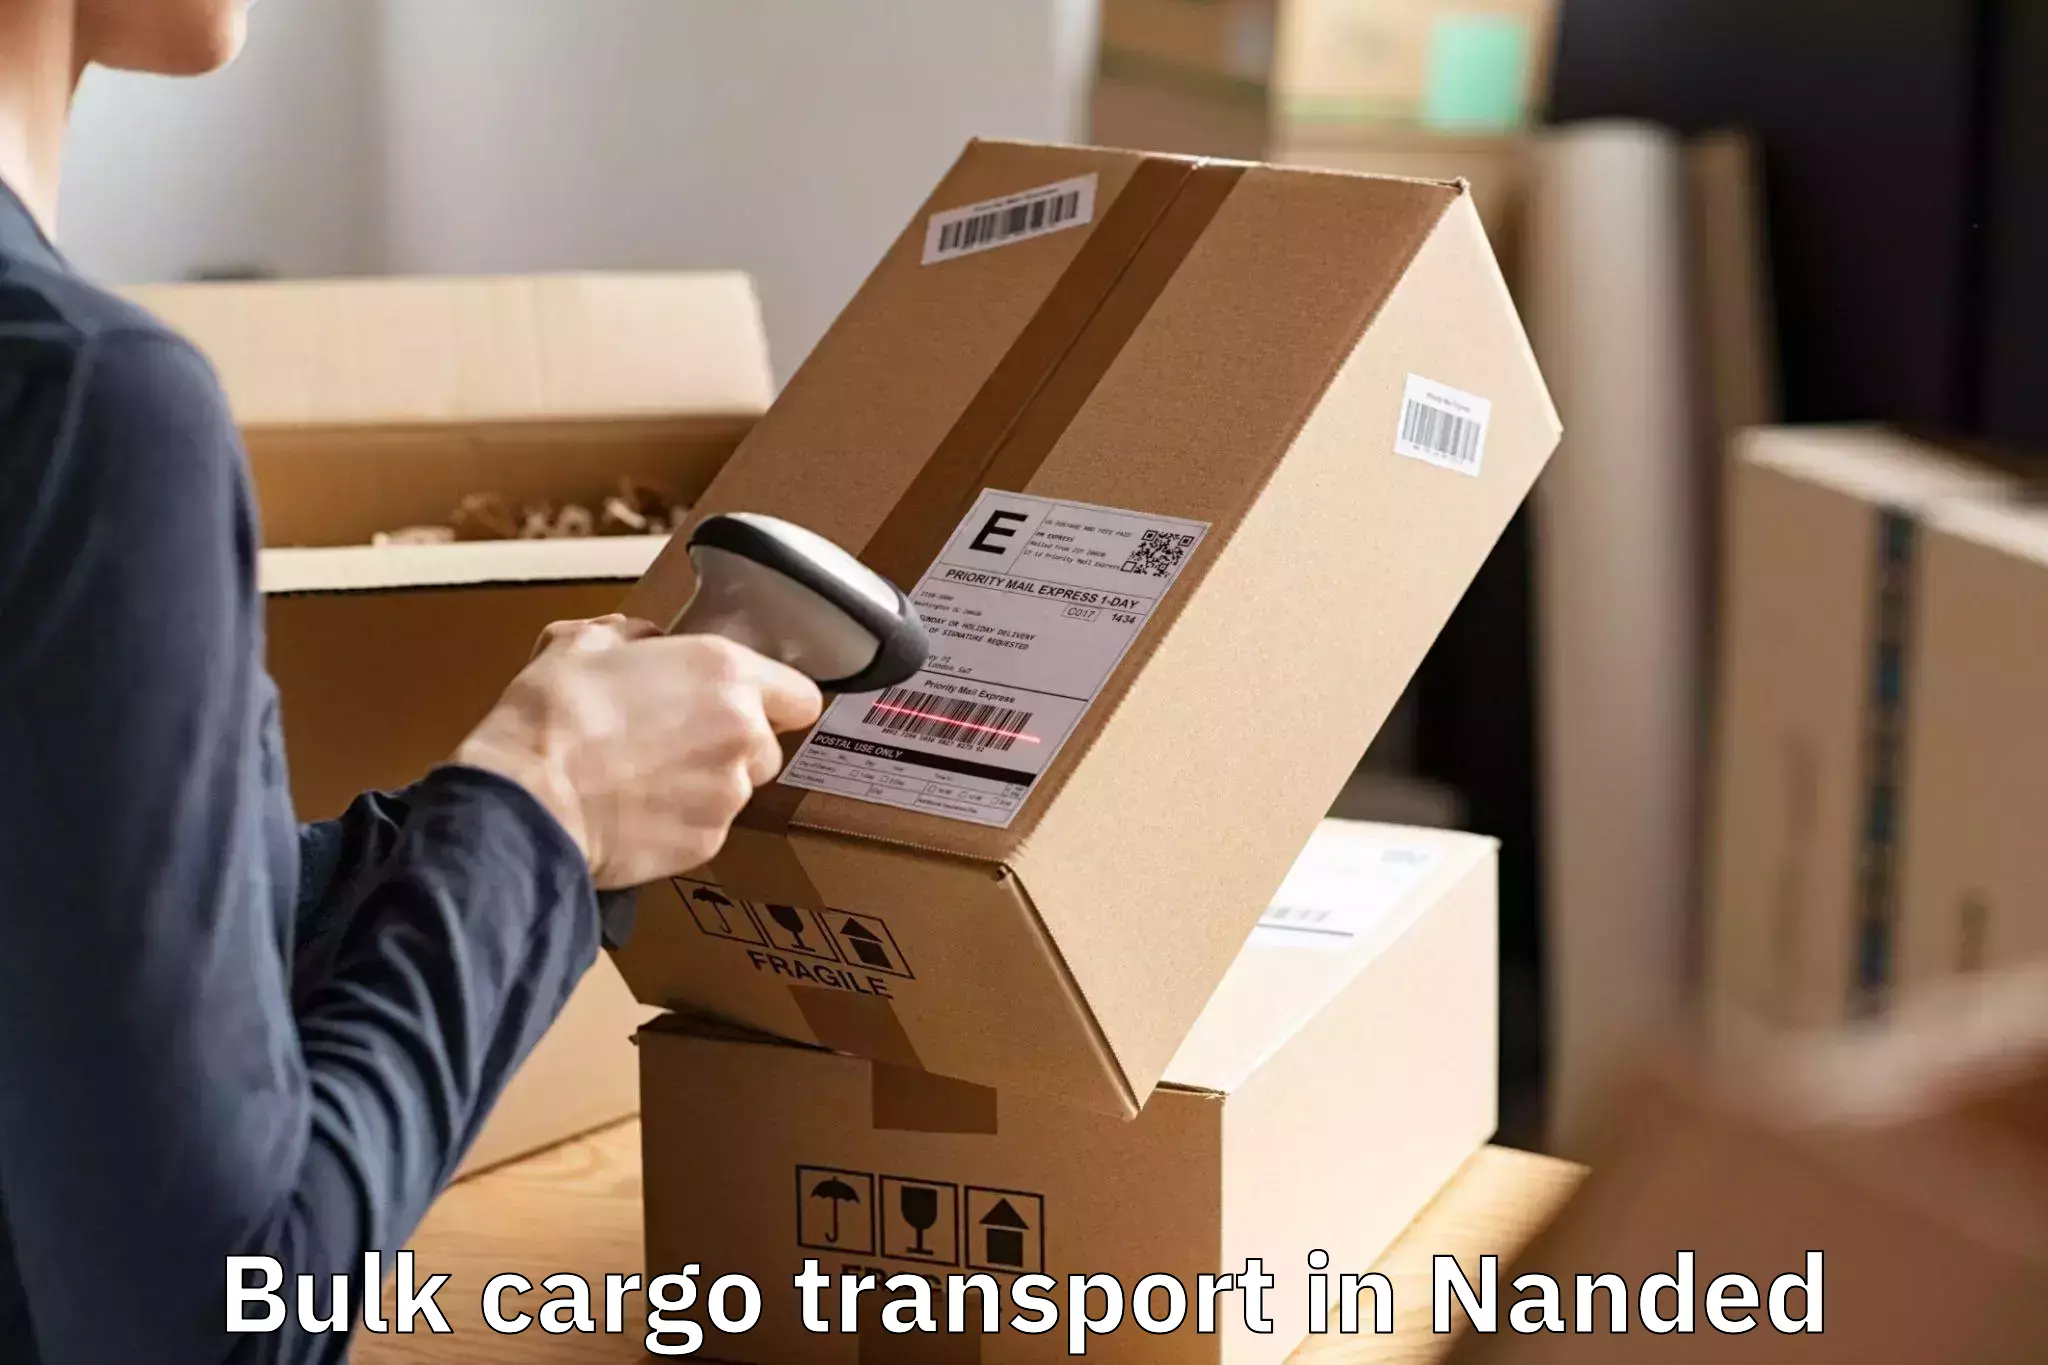 Comprehensive Bulk Cargo Transport in Nanded, Maharashtra (MH)